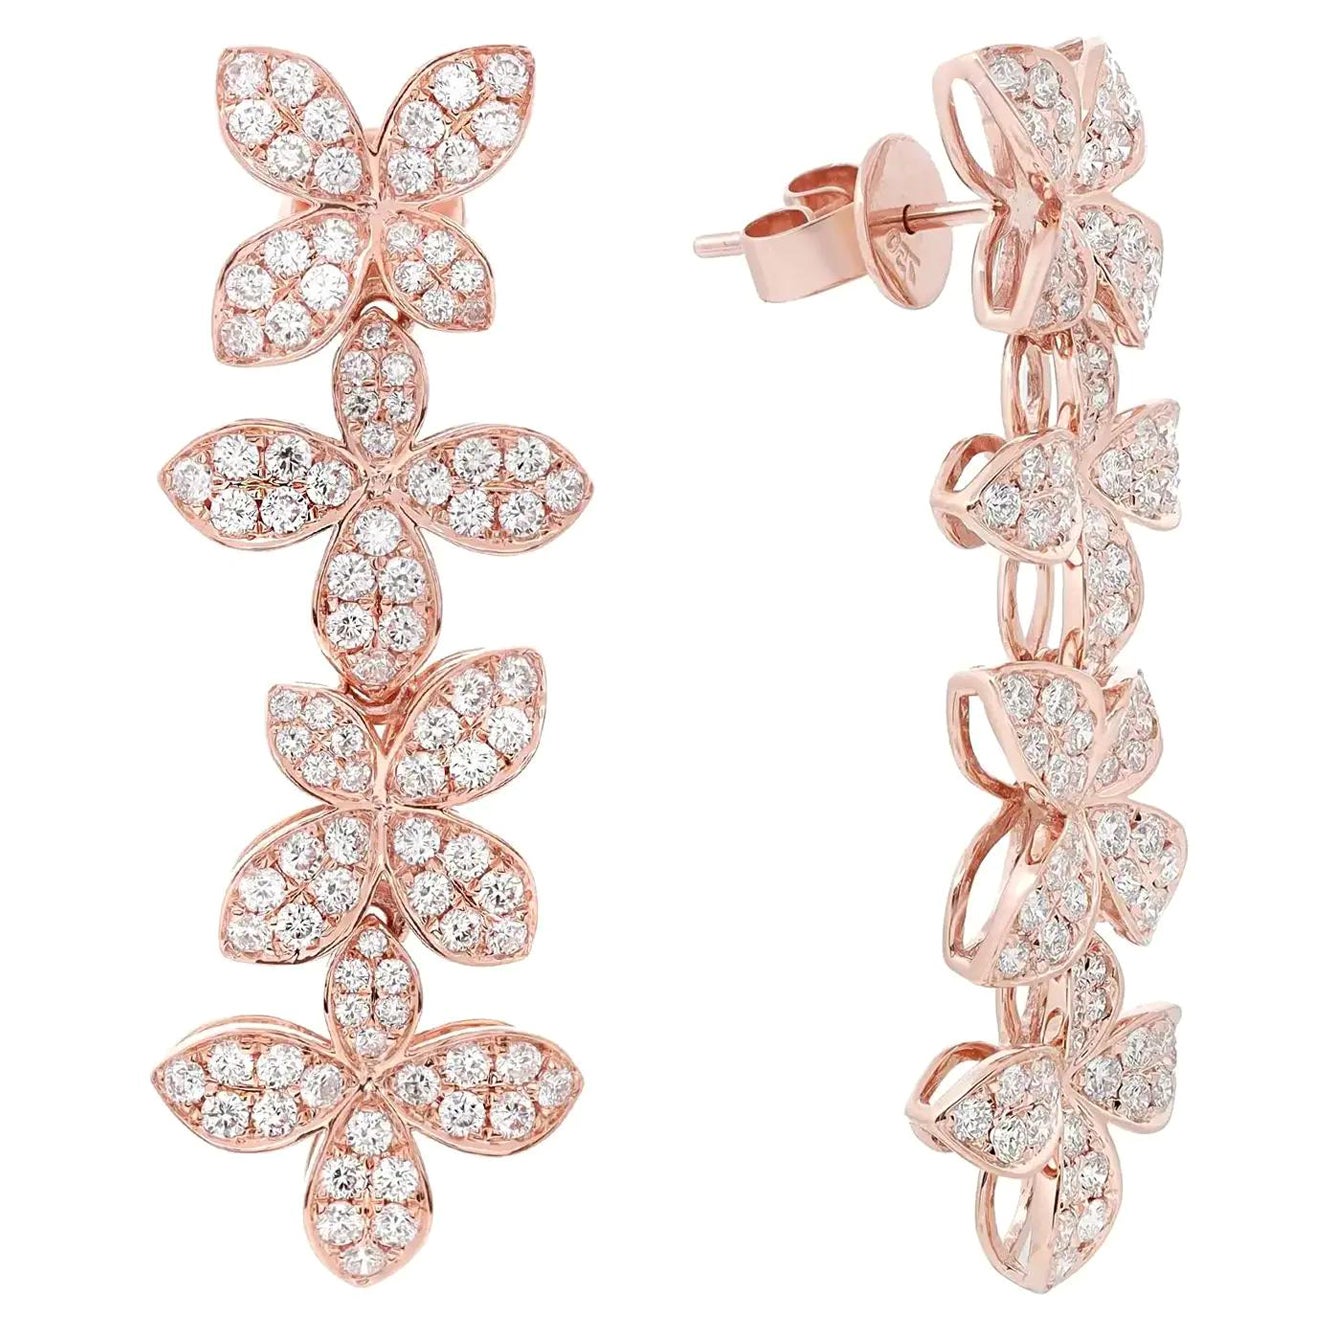 Pave Set Round Cut Diamond Flower Drop Earrings 18K Rose Gold 1.95Cttw For Sale